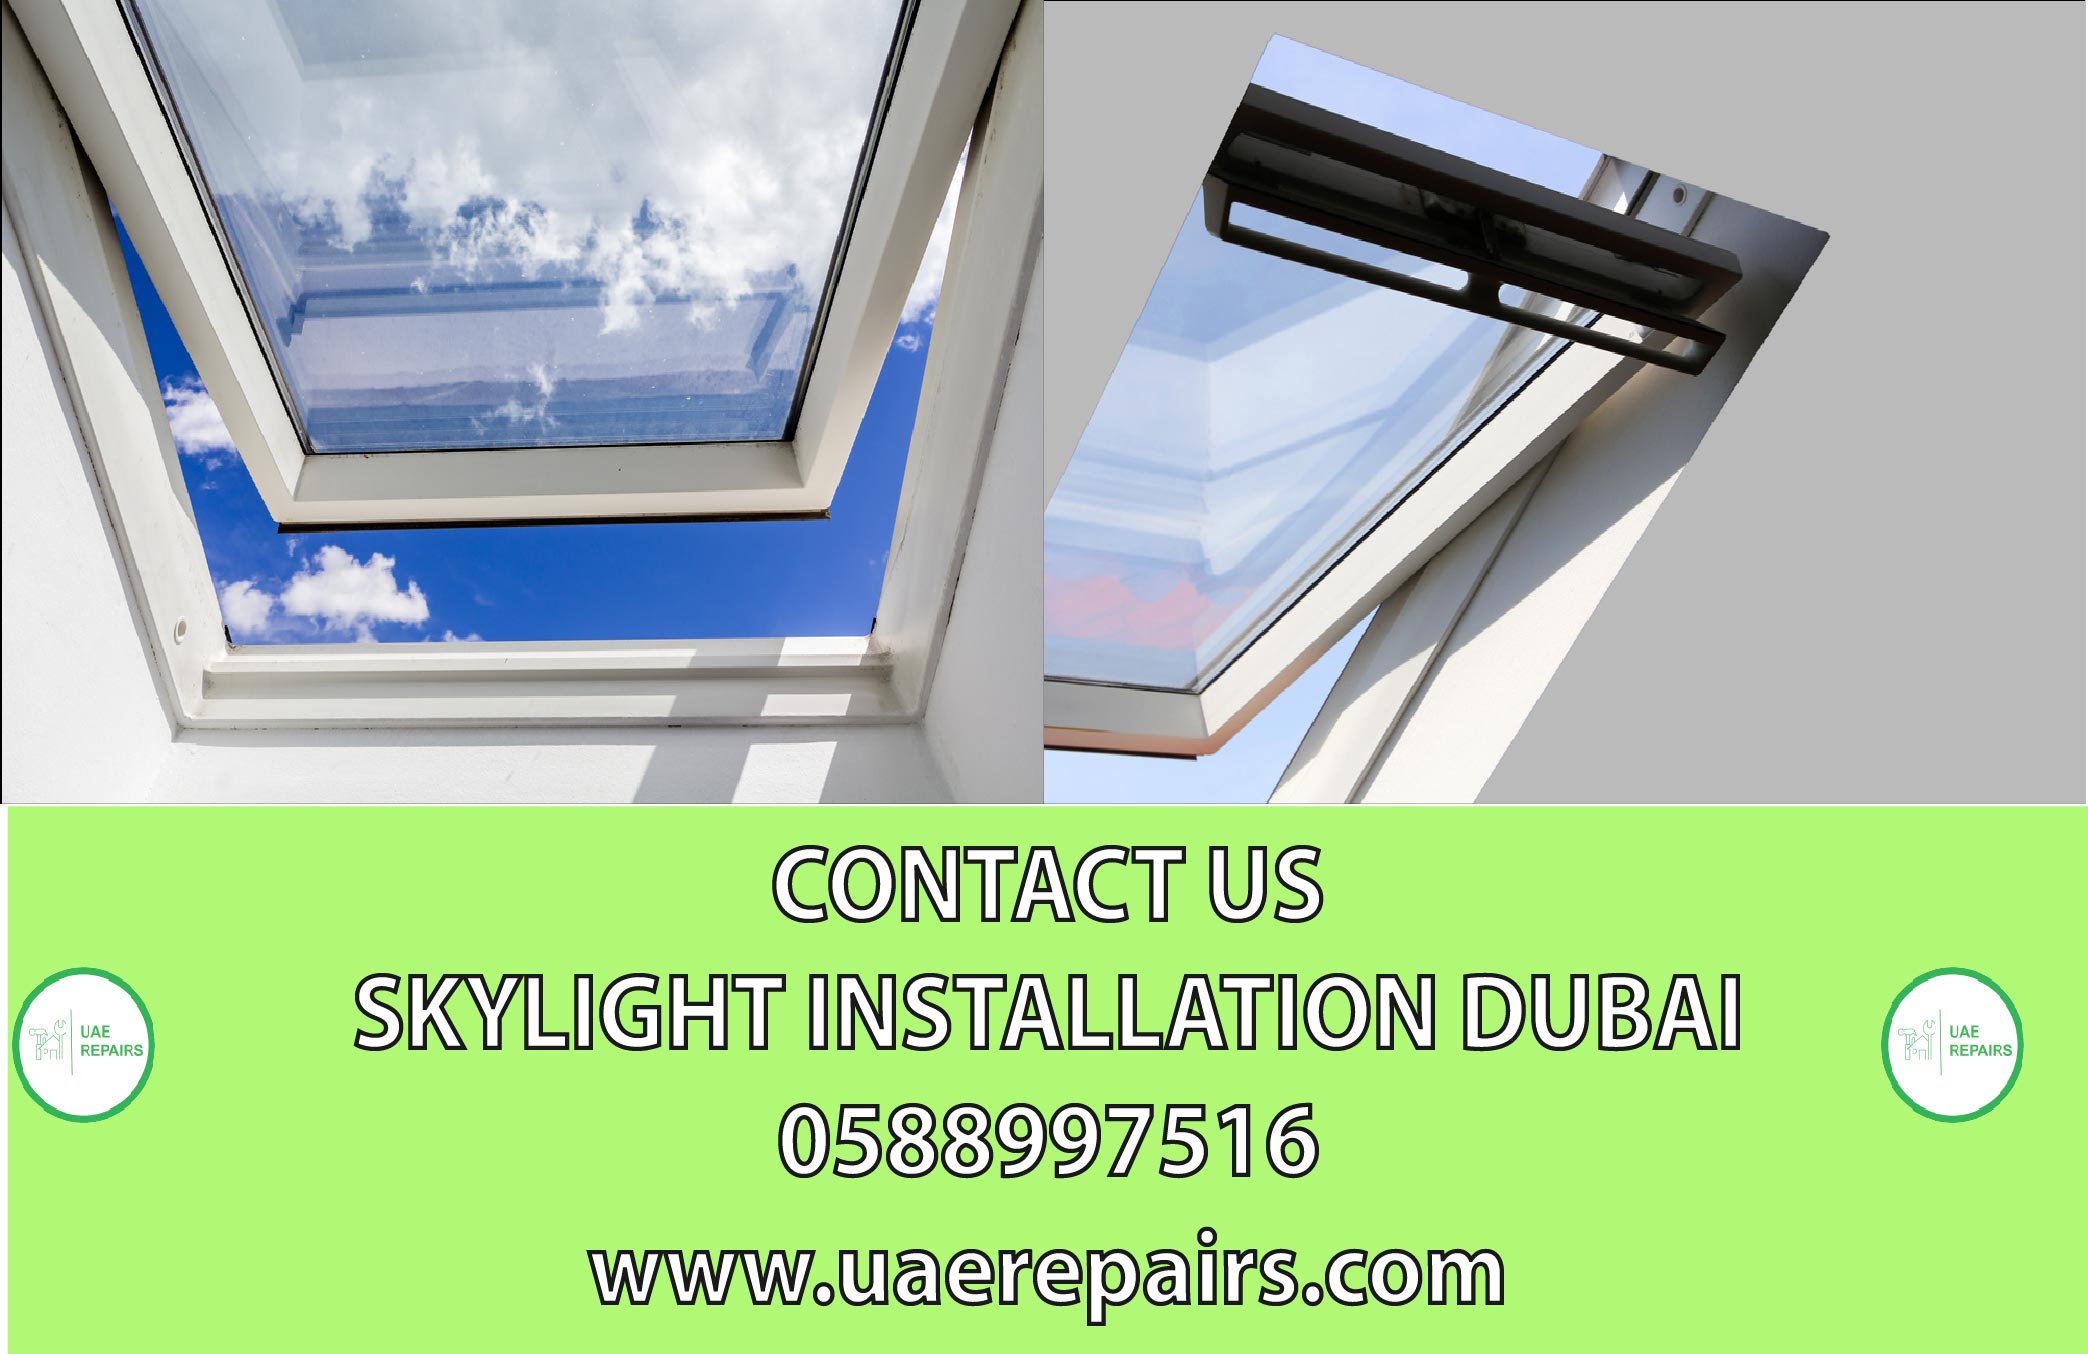 CONTACT UAE REPAIRS AT 0588997516 FOR SKYLIGHT INSTALLATION DUBAI